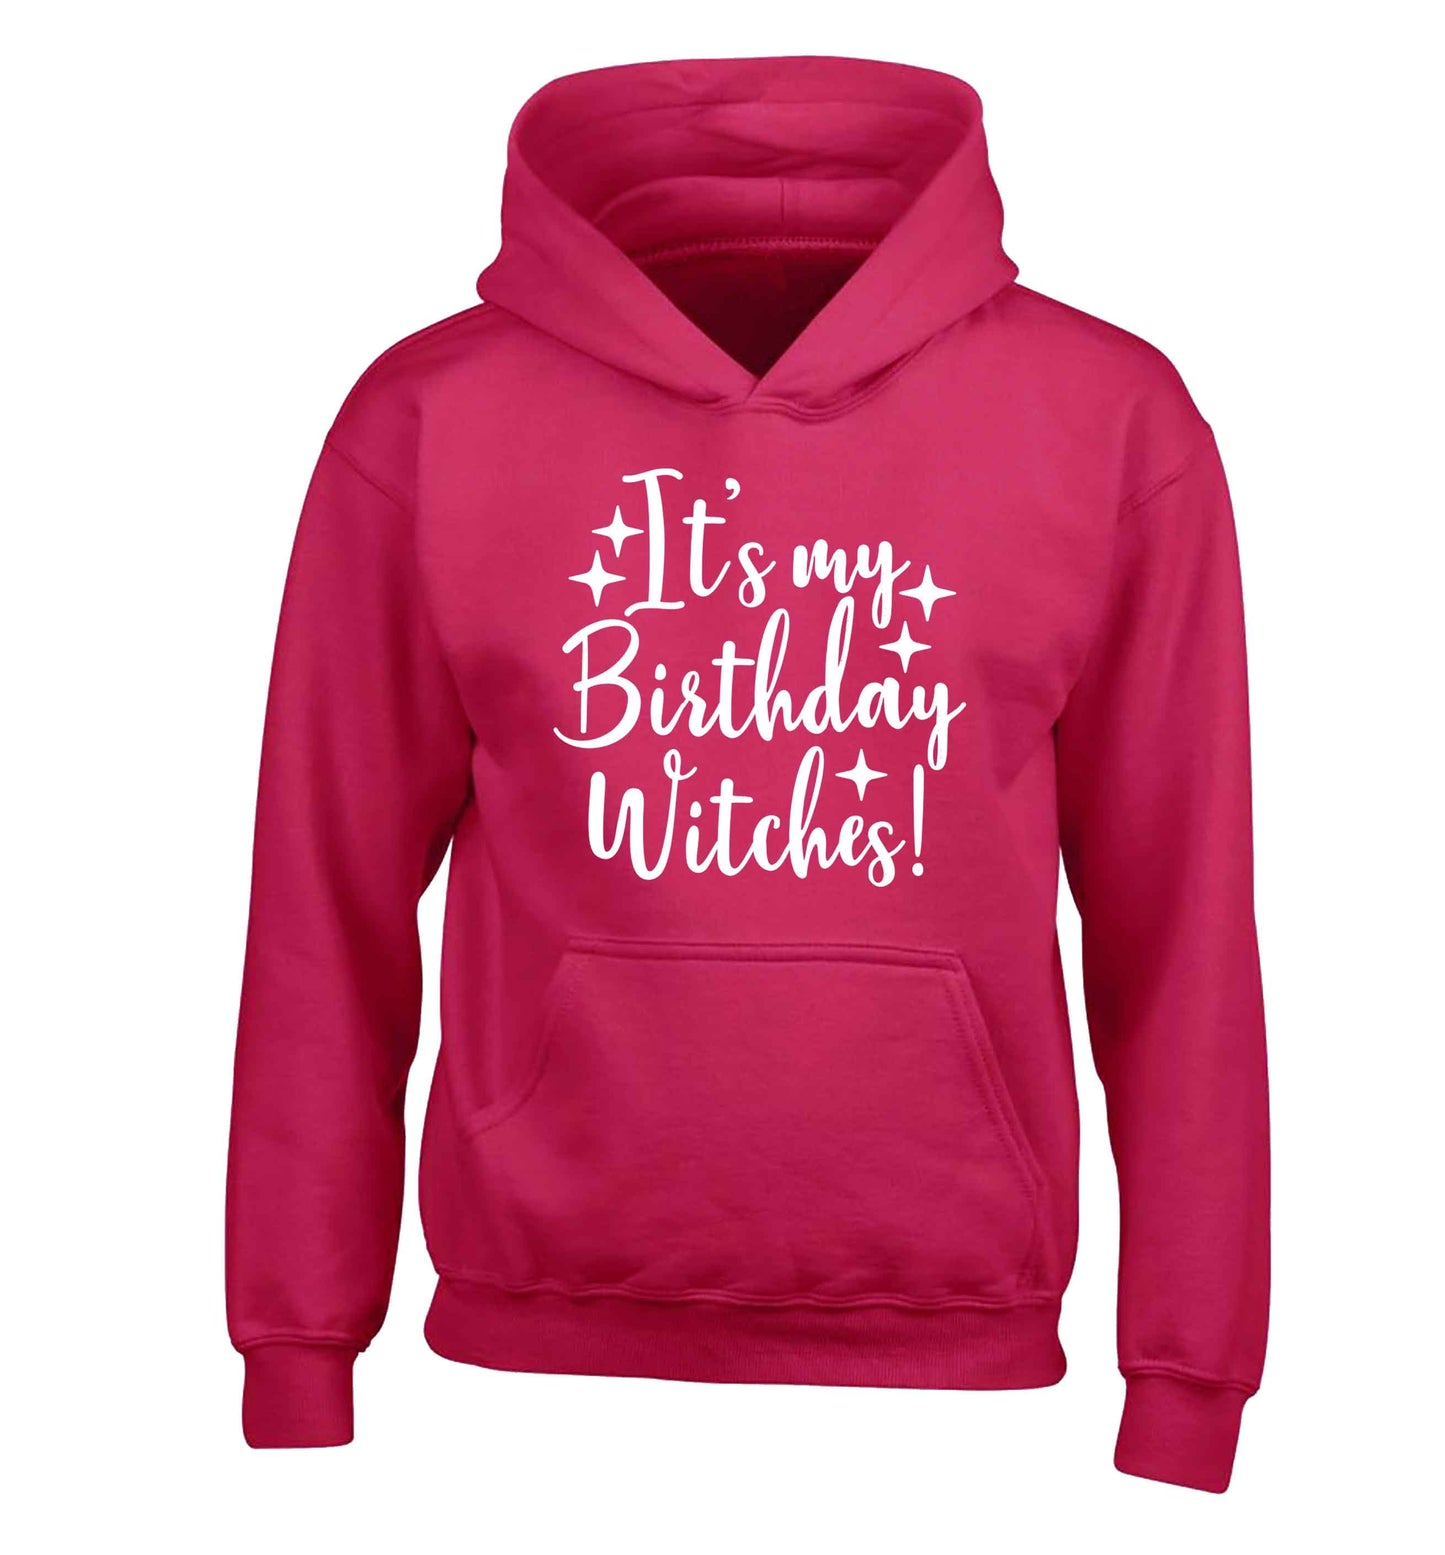 It's my birthday witches!children's pink hoodie 12-13 Years